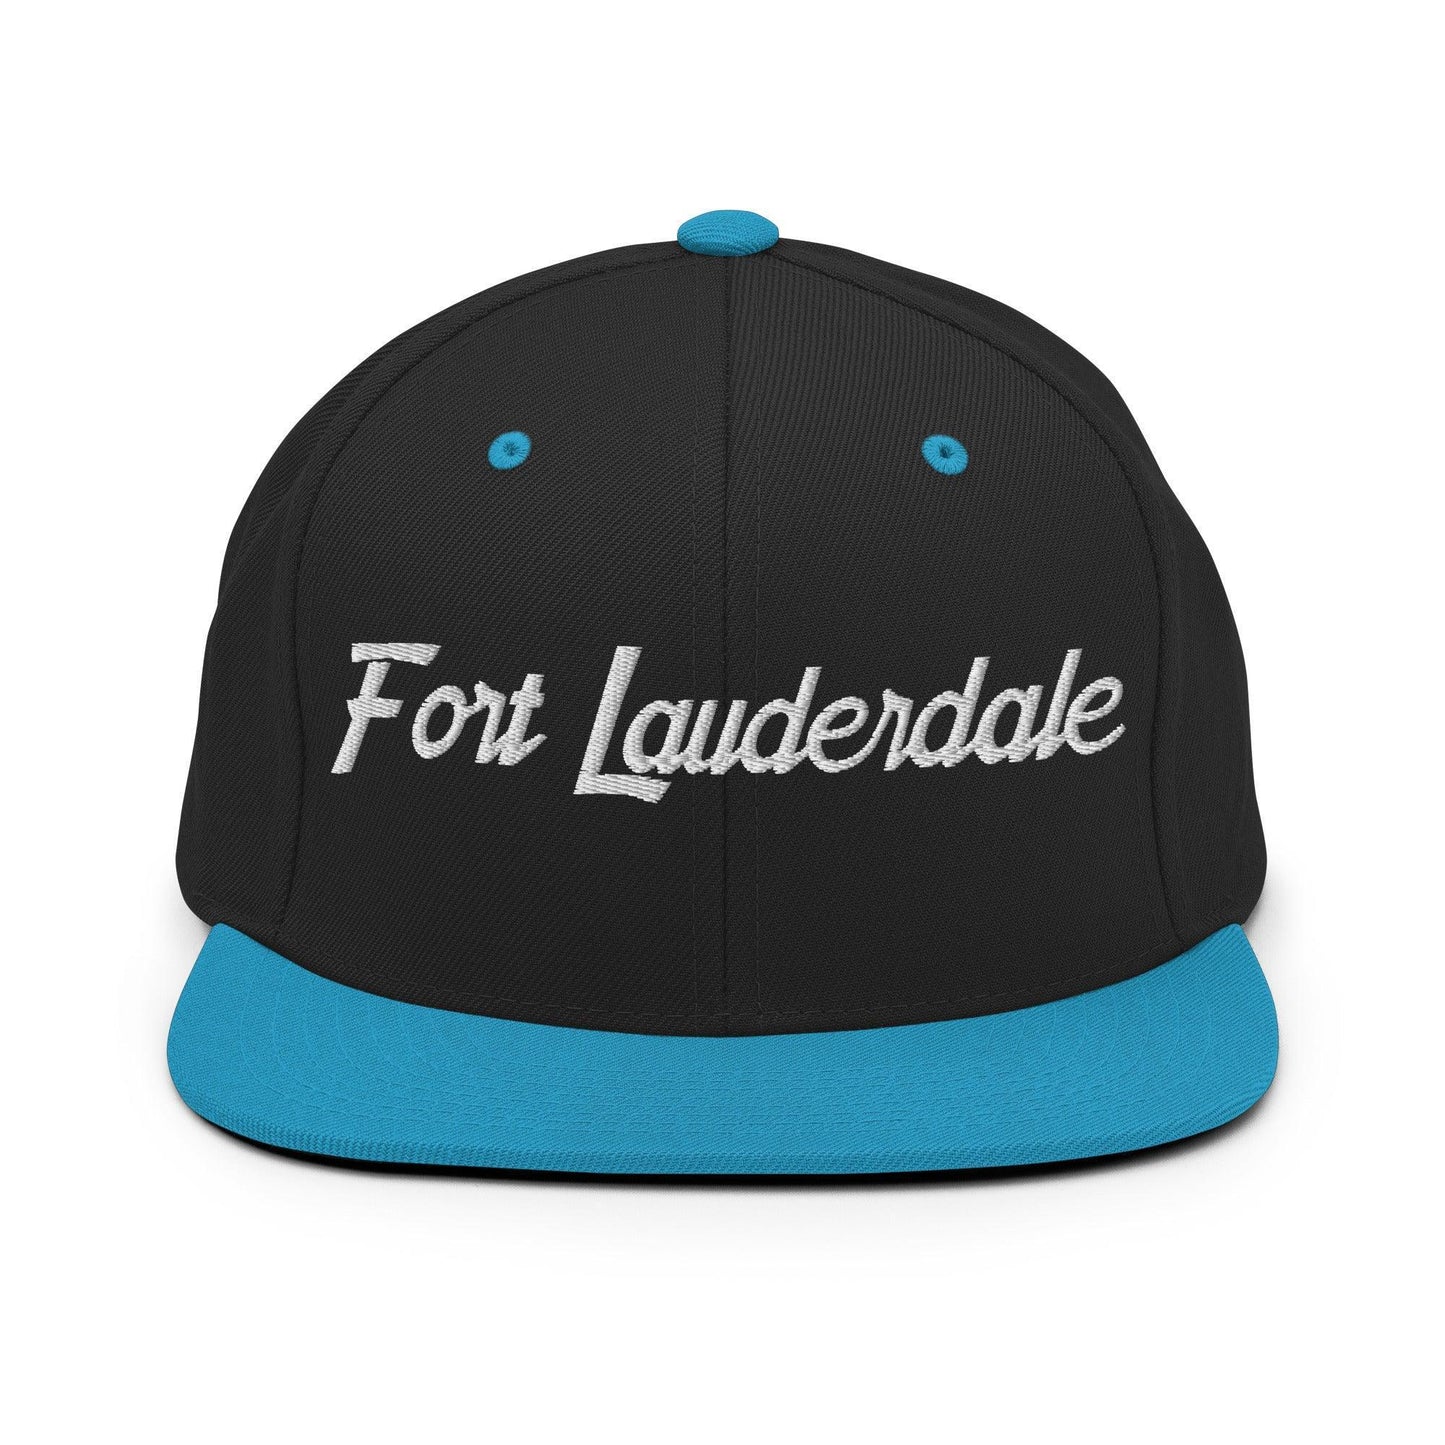 Fort Lauderdale Script Snapback Hat Black Teal